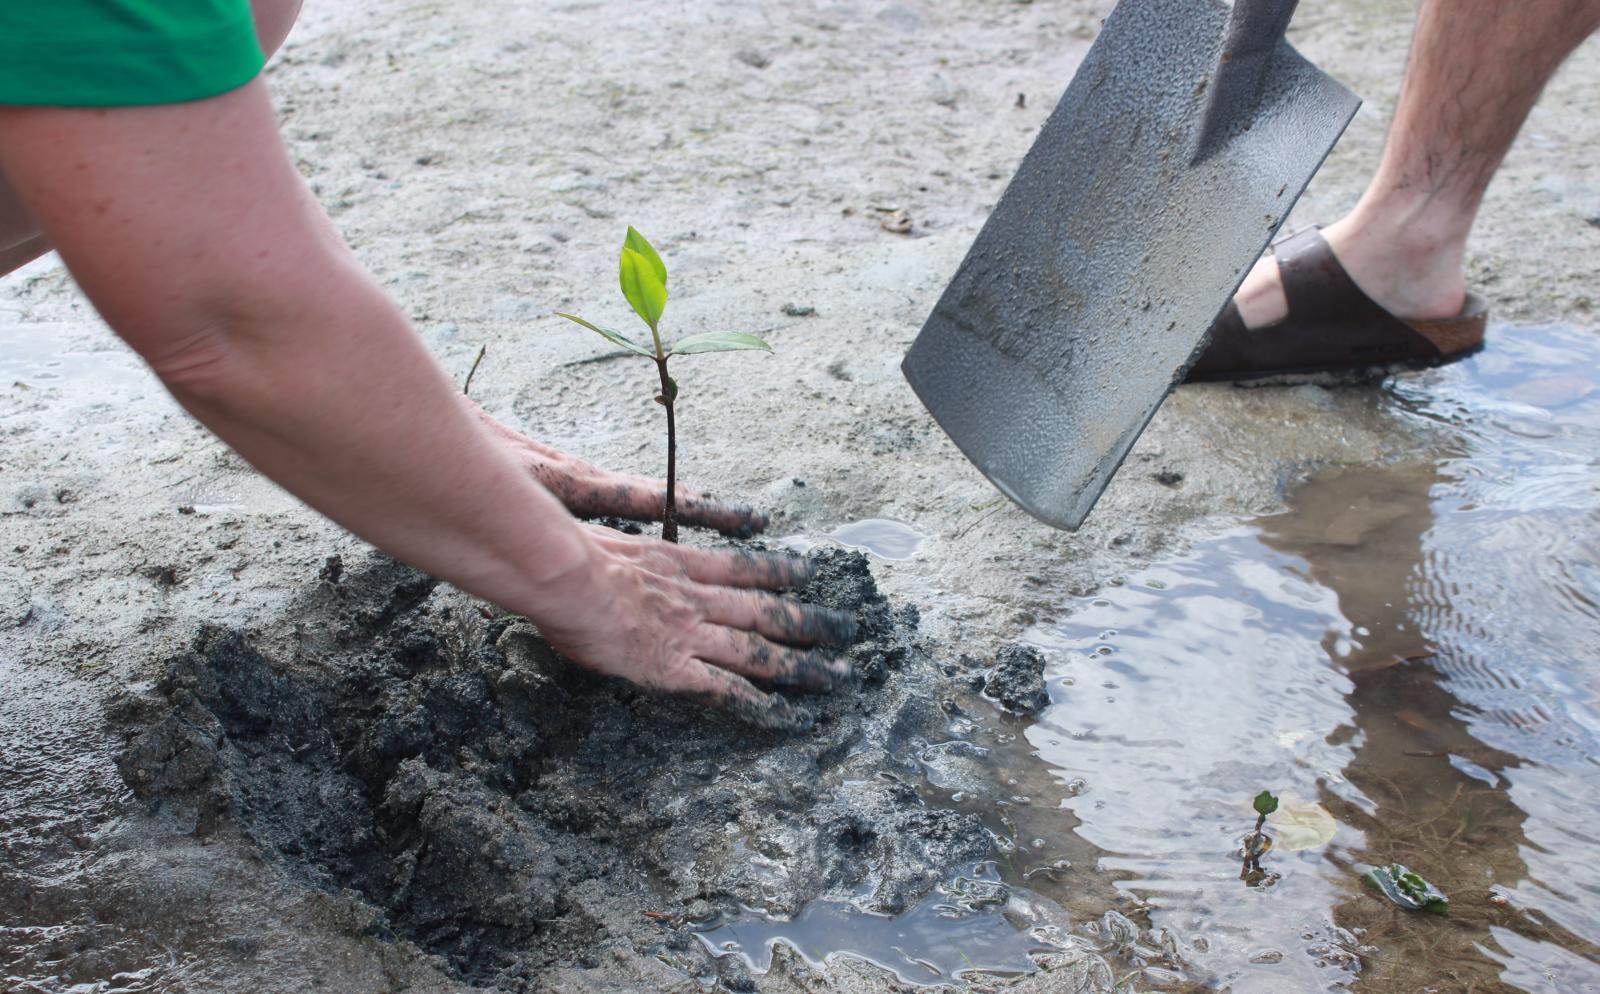 Conservation volunteer replants a mangrove propagule in Fiji